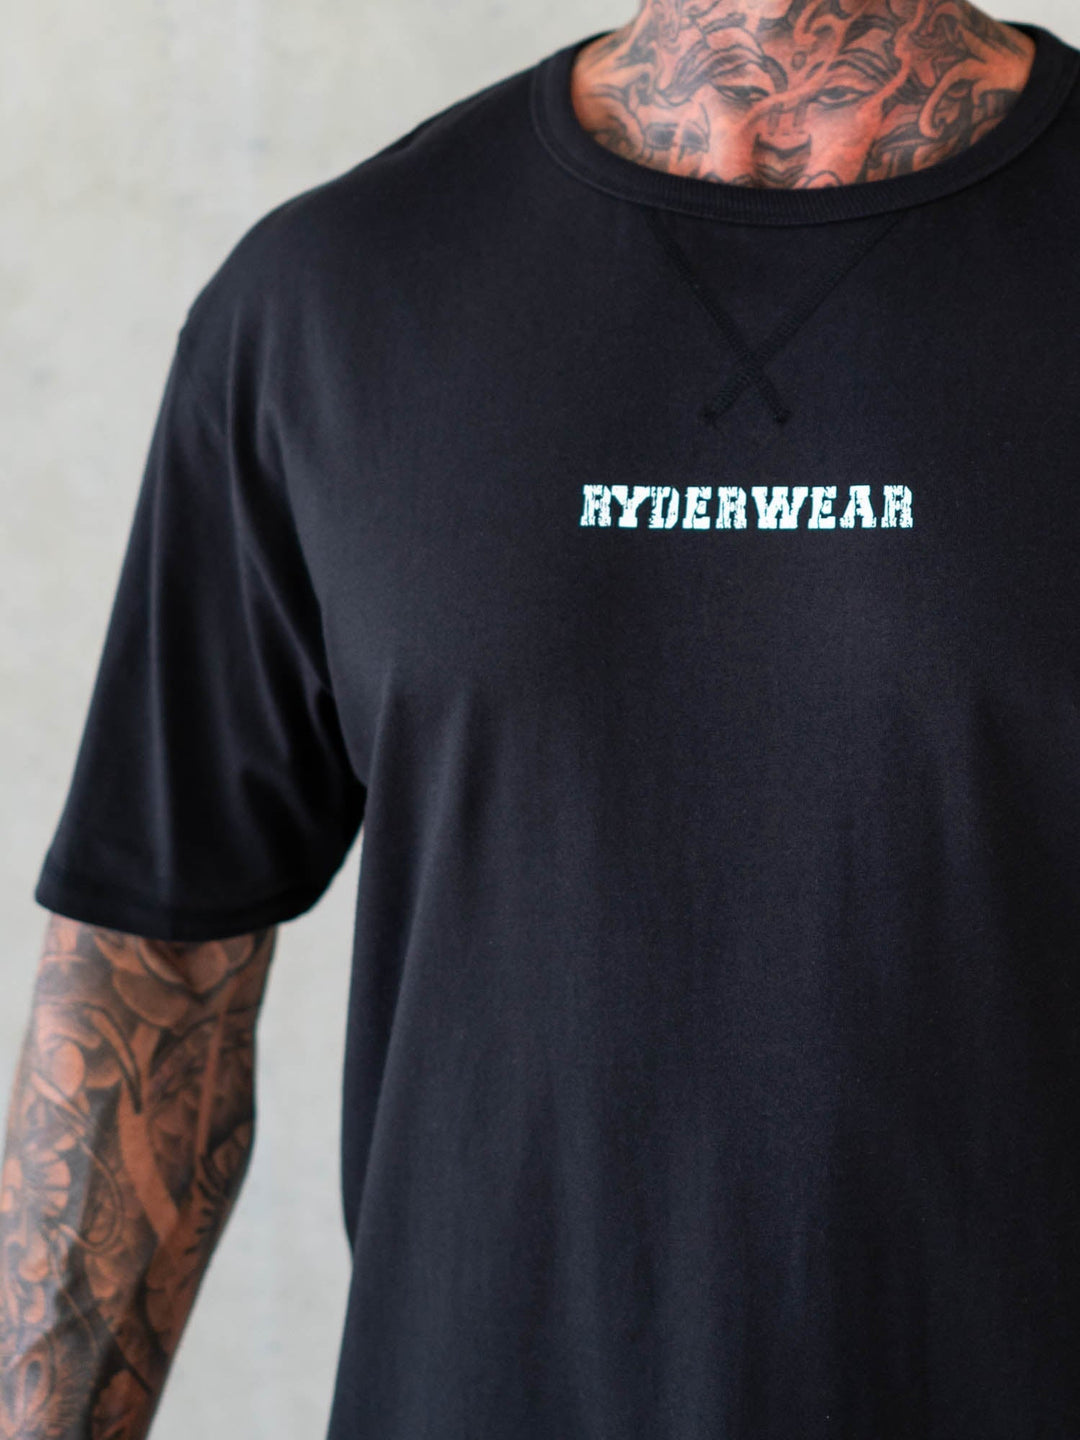 Octane T-Shirt - Faded Black Clothing Ryderwear 